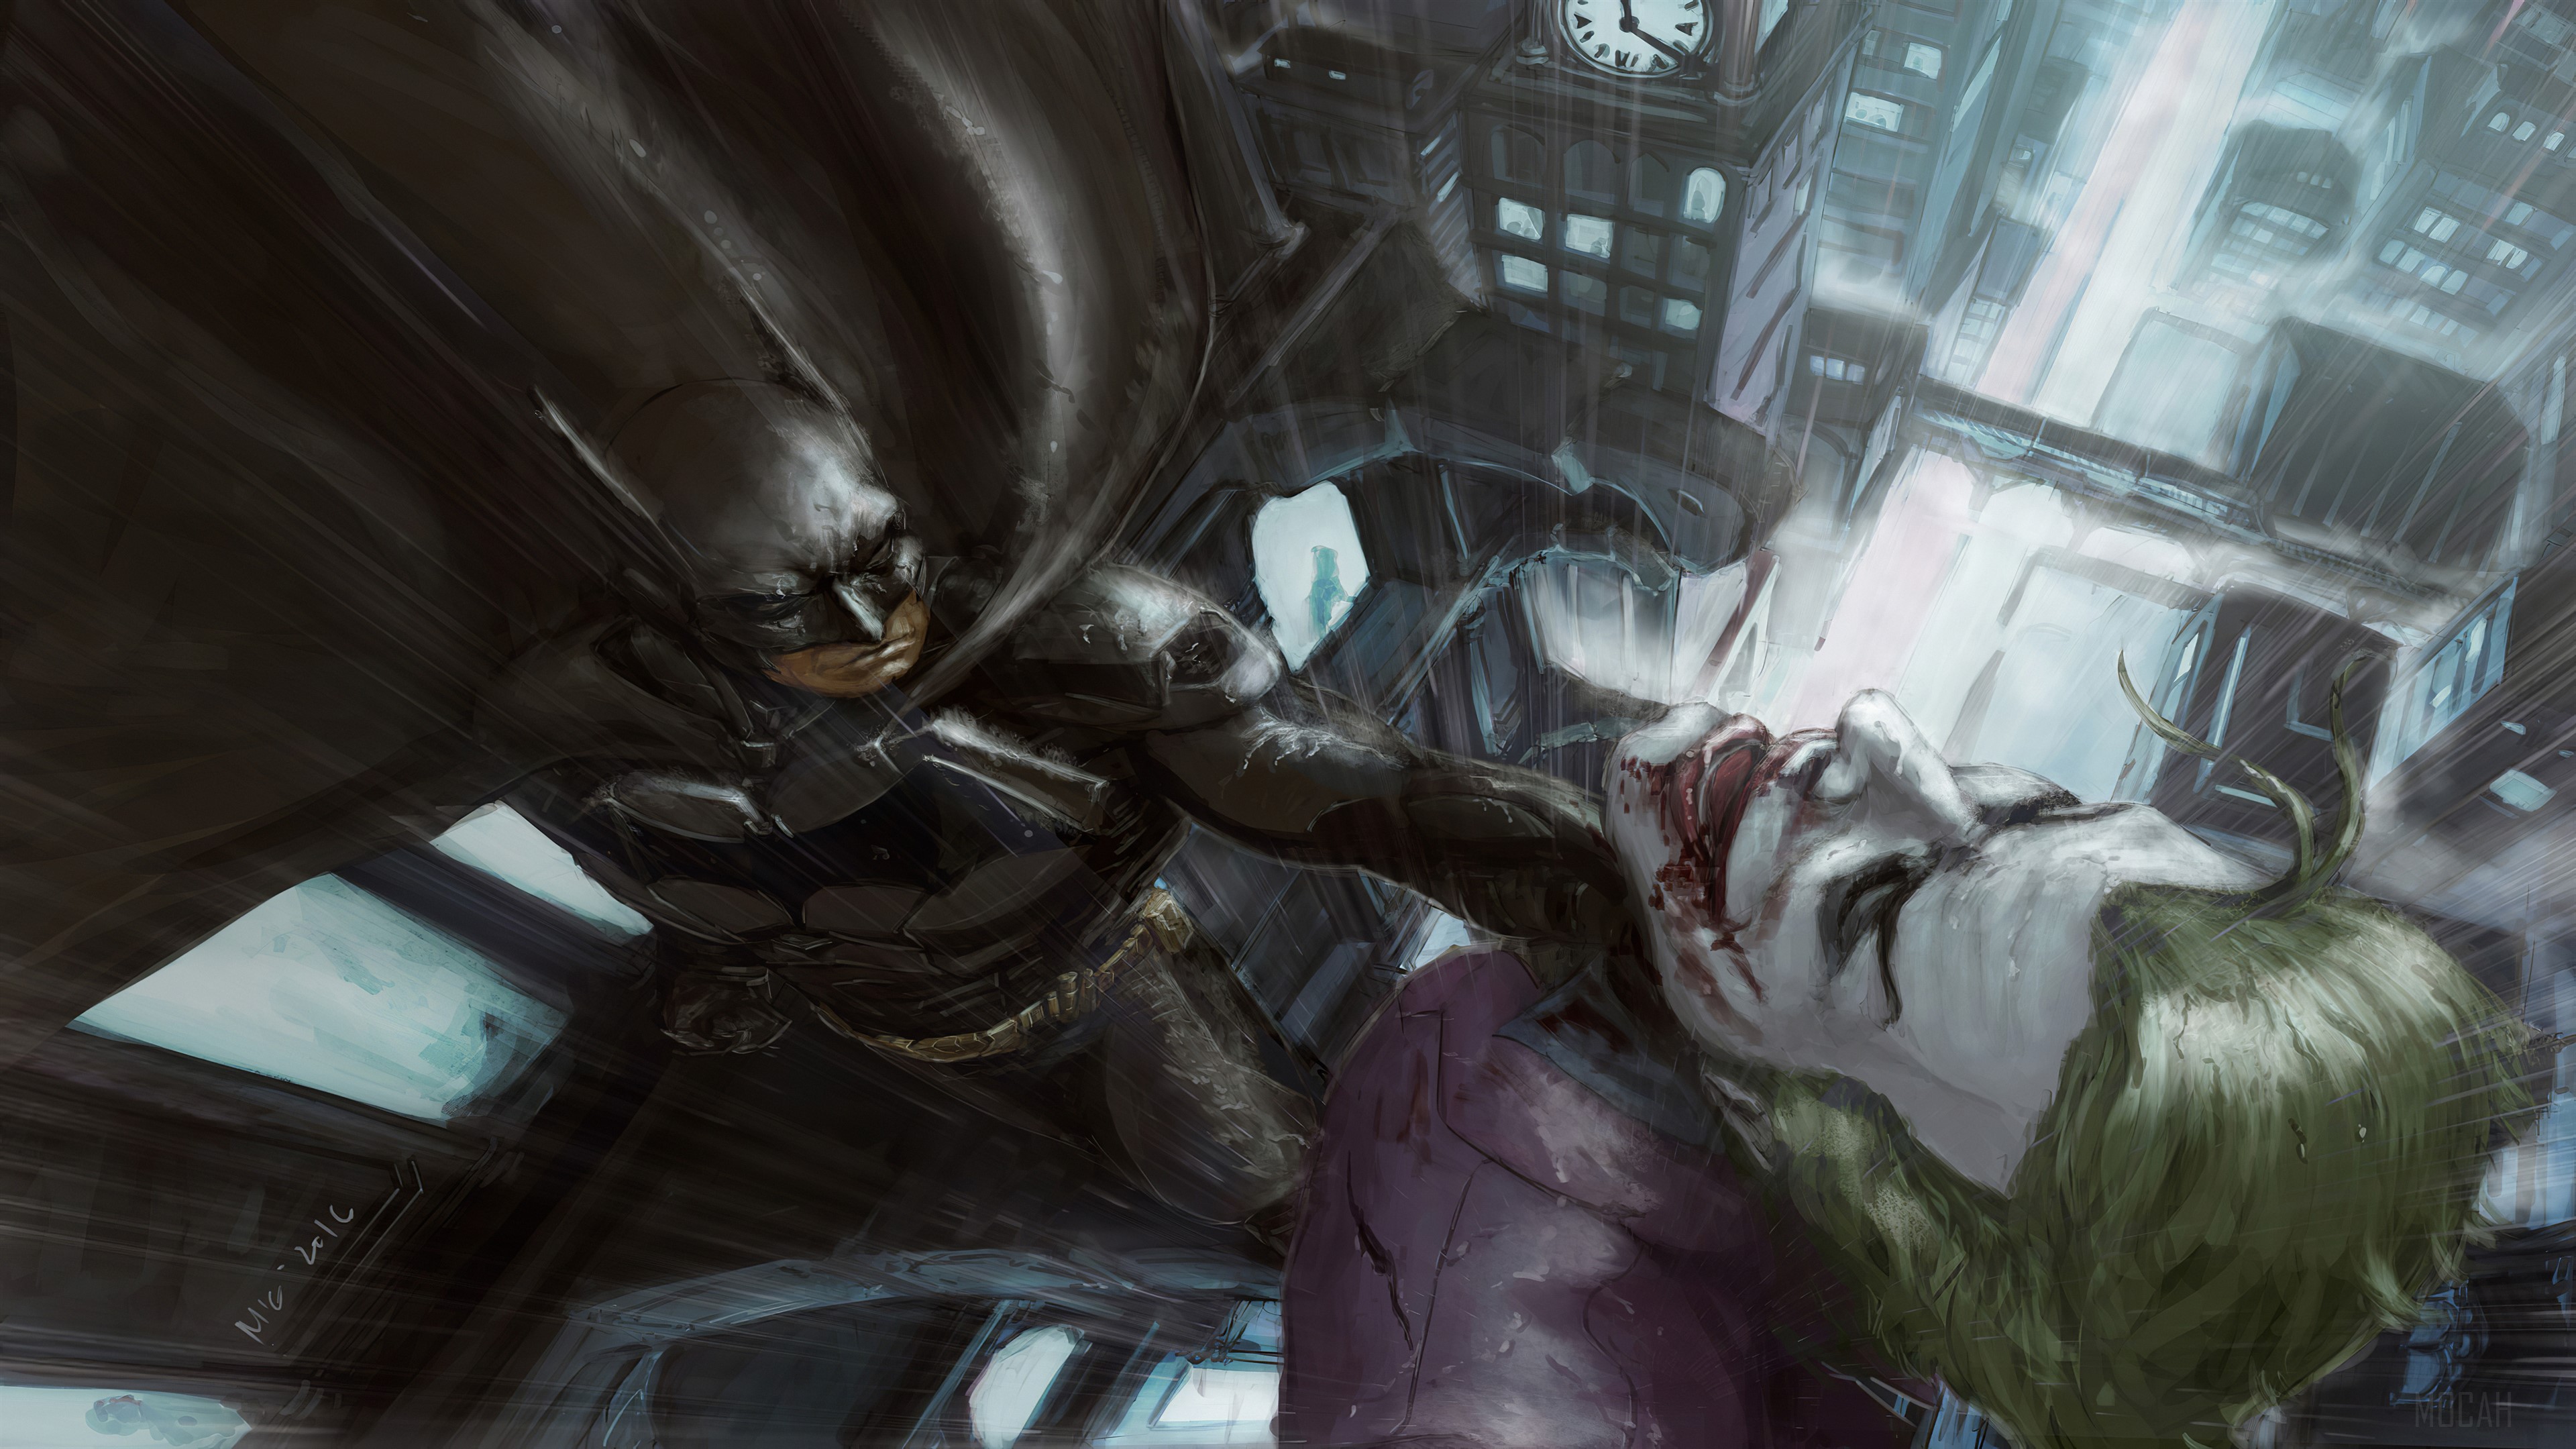 Batman vs joker art k